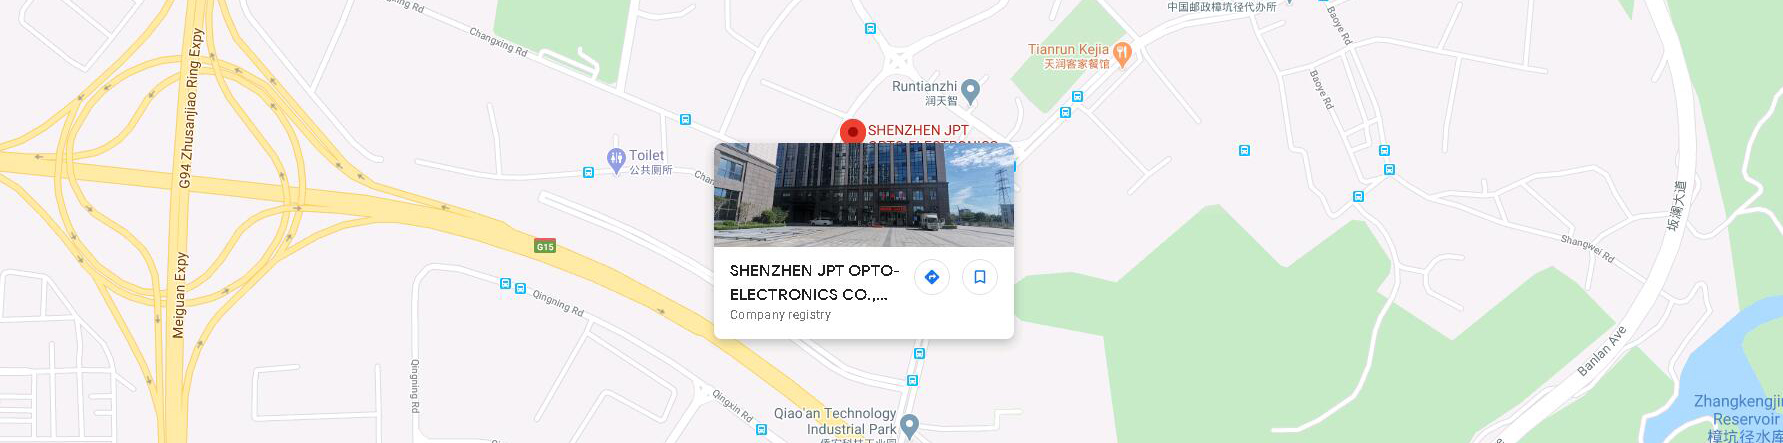 SHENZHEN JPT OPTO-ELECTRONICS CO., LTD. address